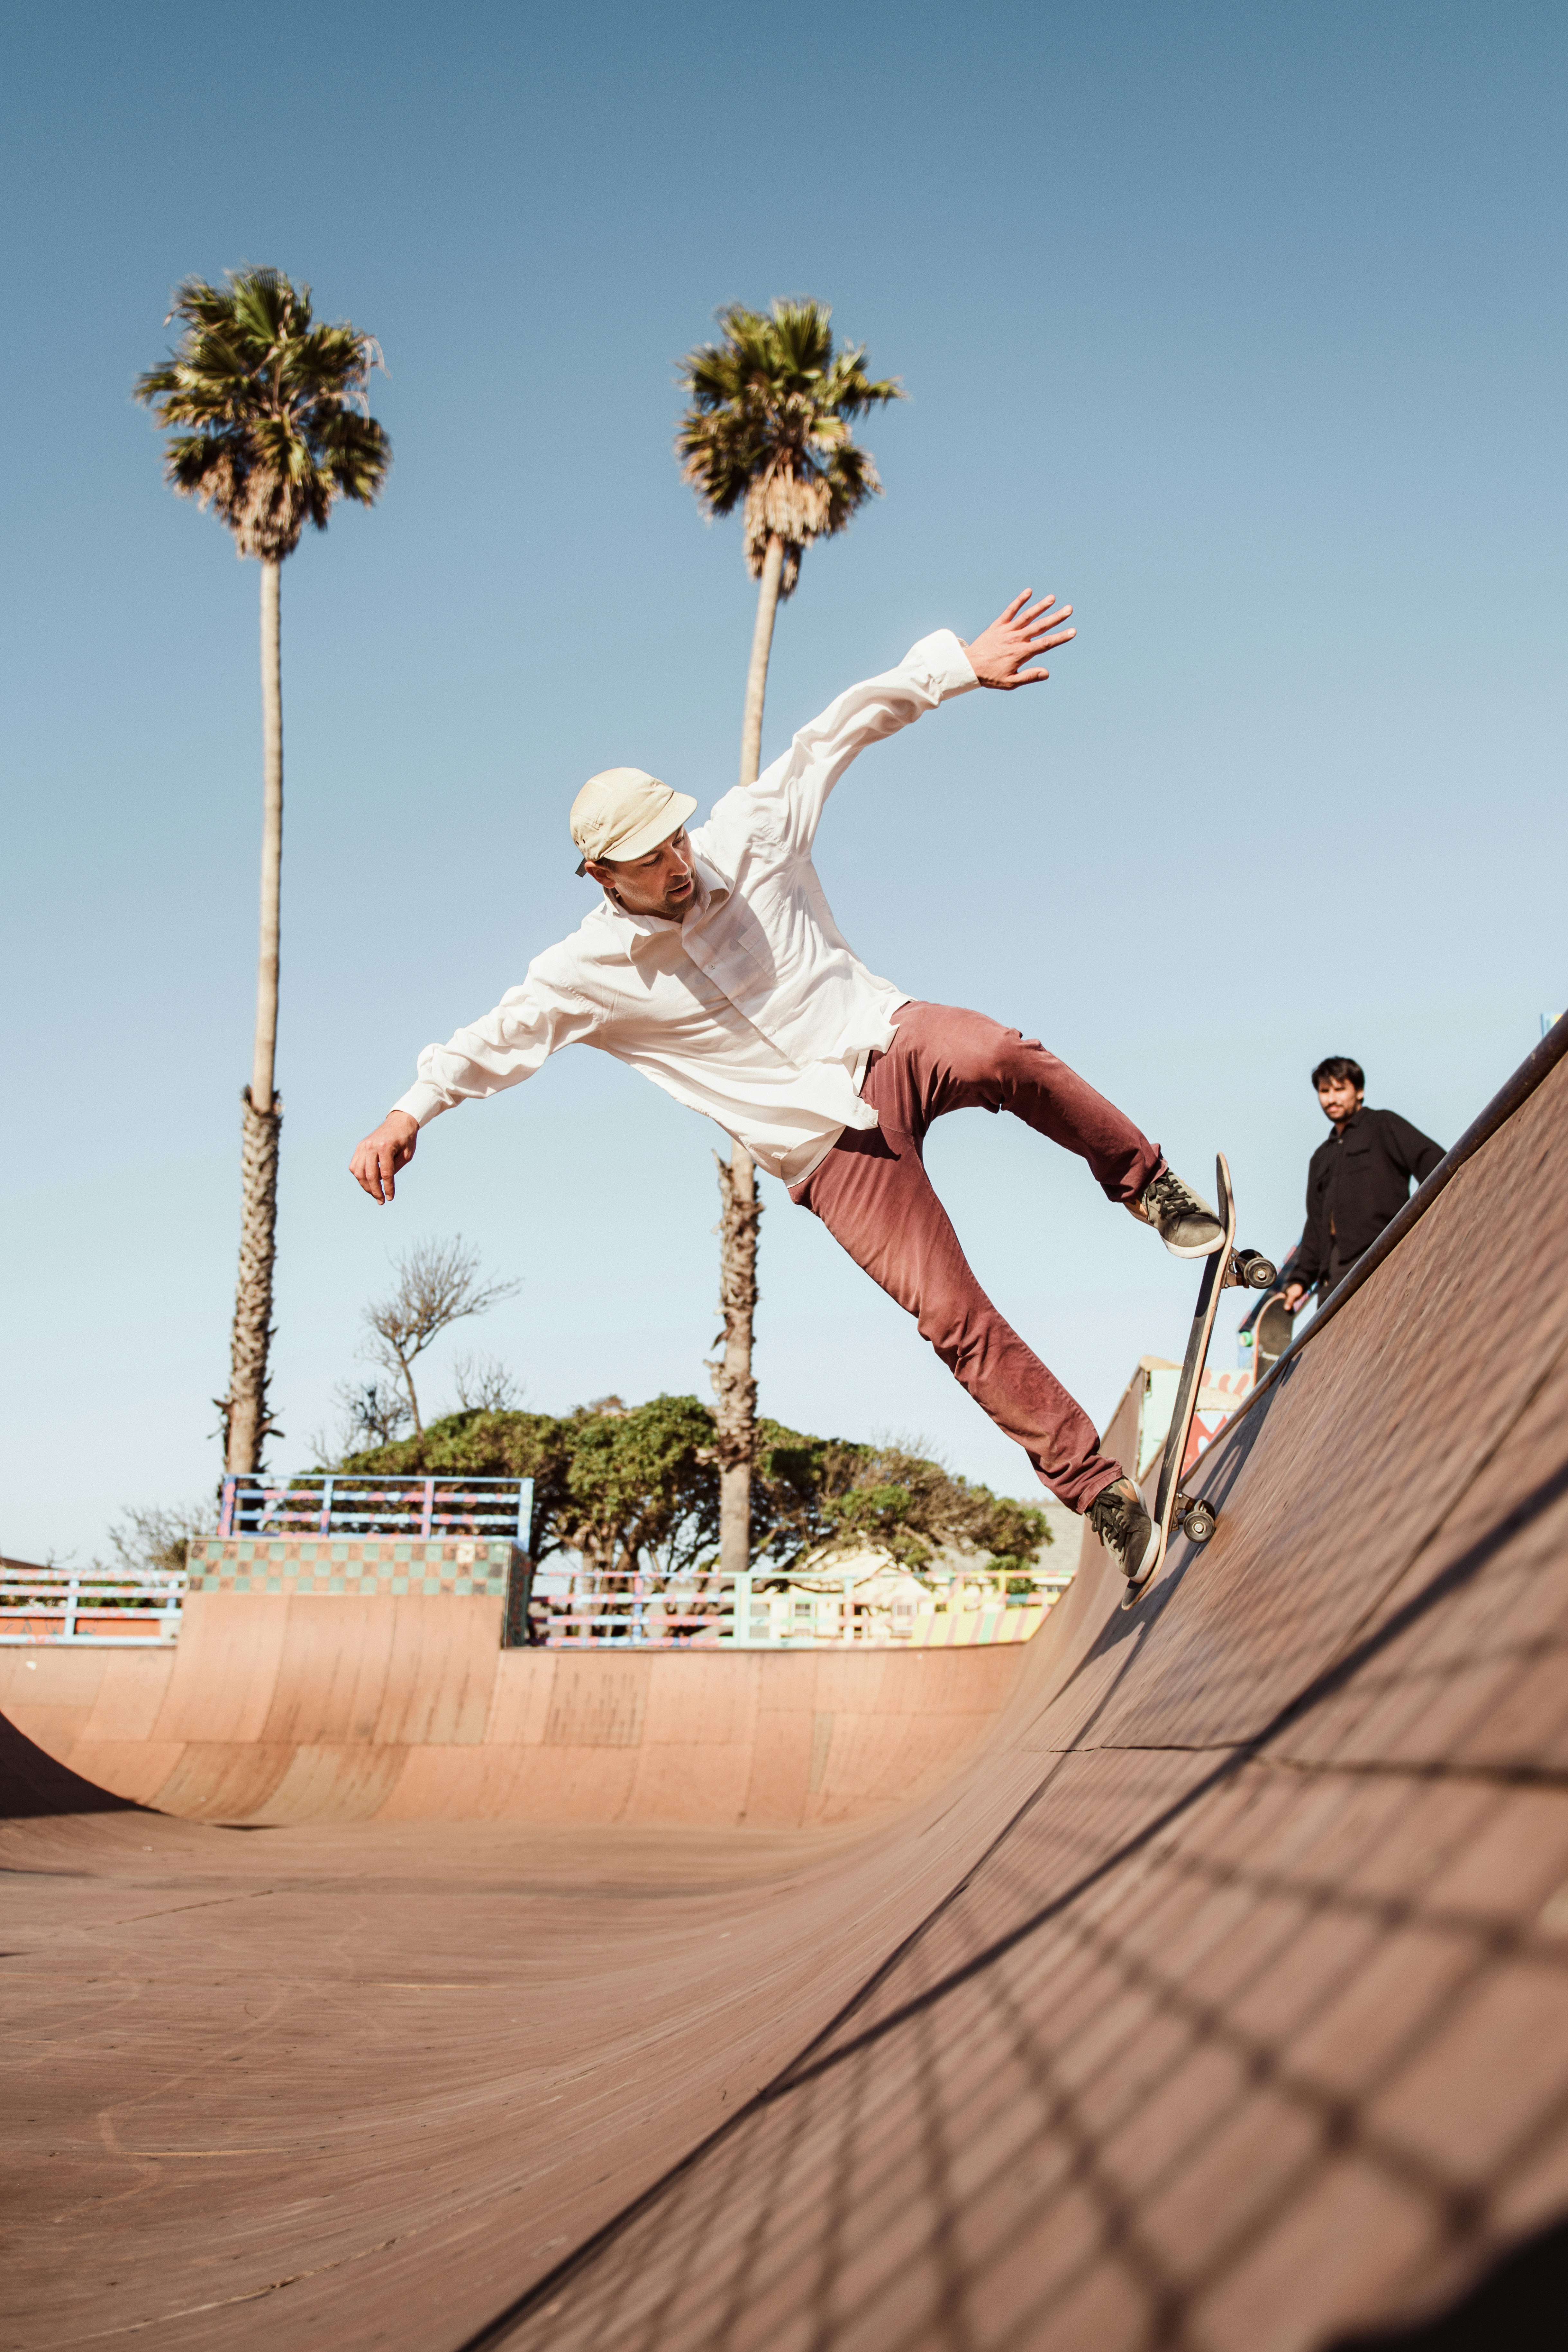 man in white shirt and brown pants riding skateboard during daytime